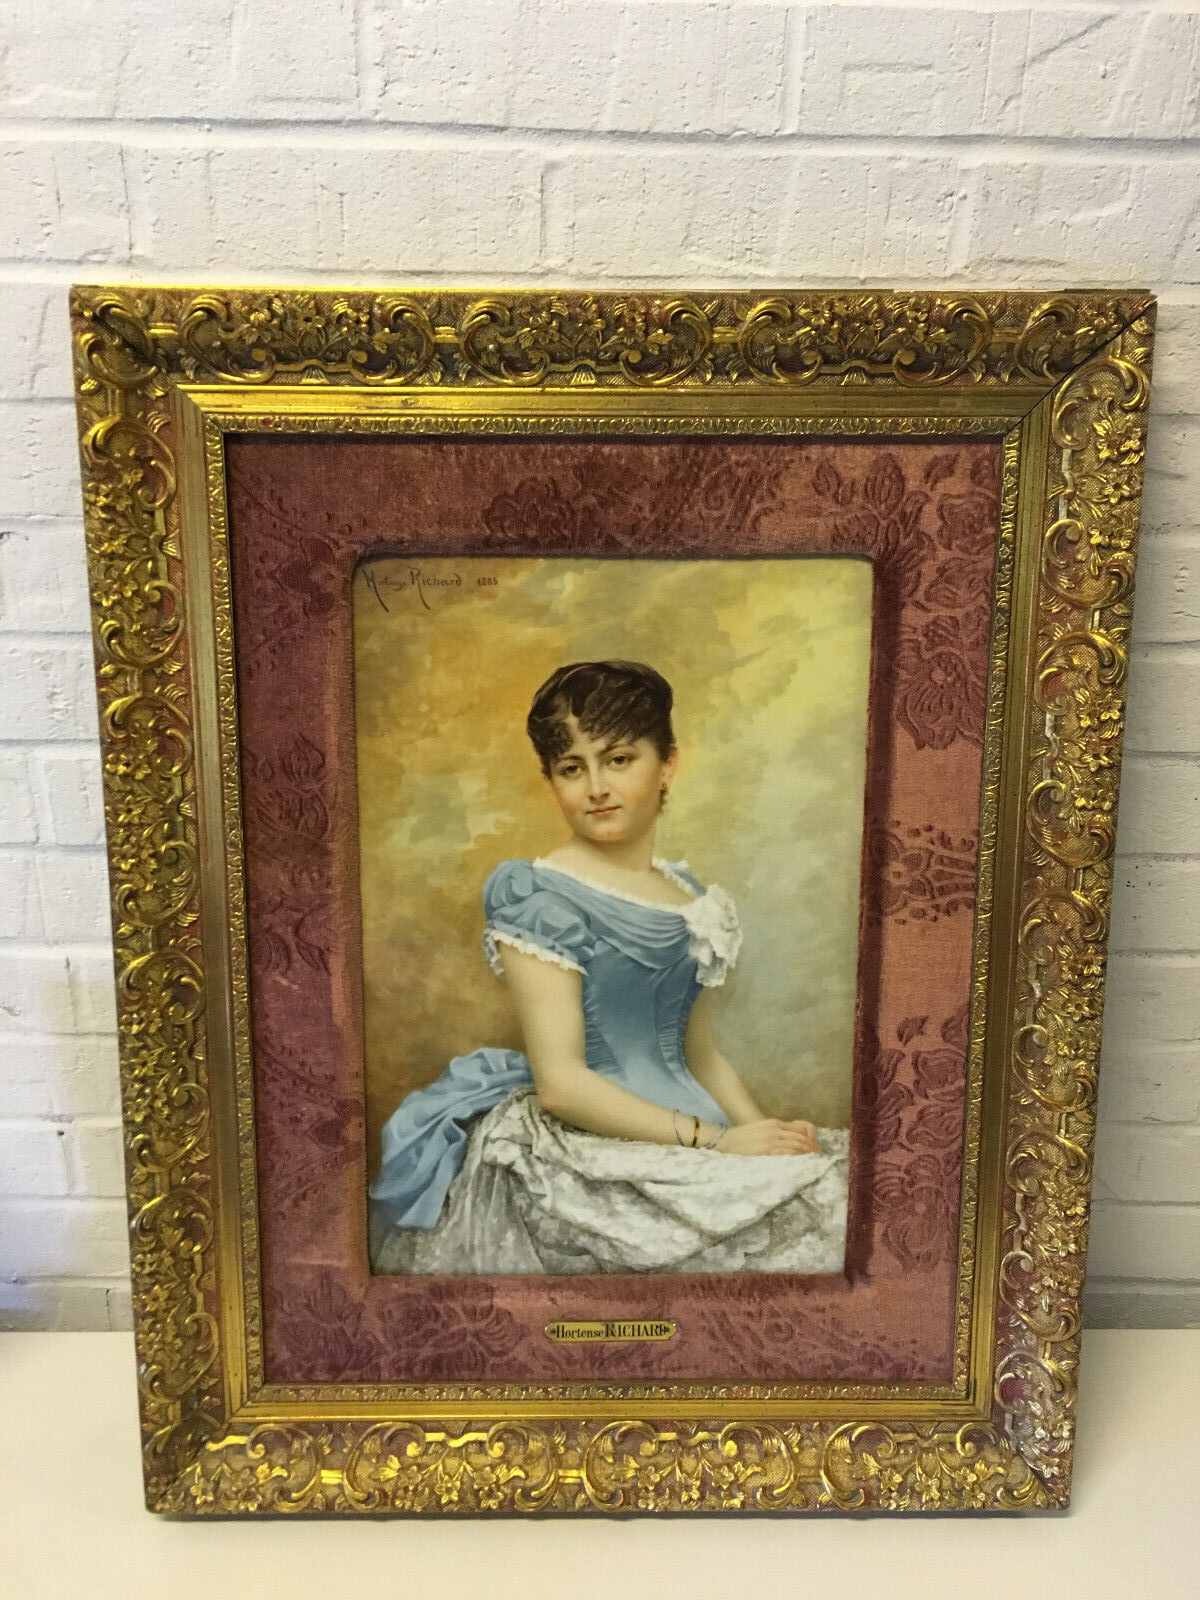 Antique 1885 Hortense Richard Signed Painted Large Porcelain Plaque Lovely Woman